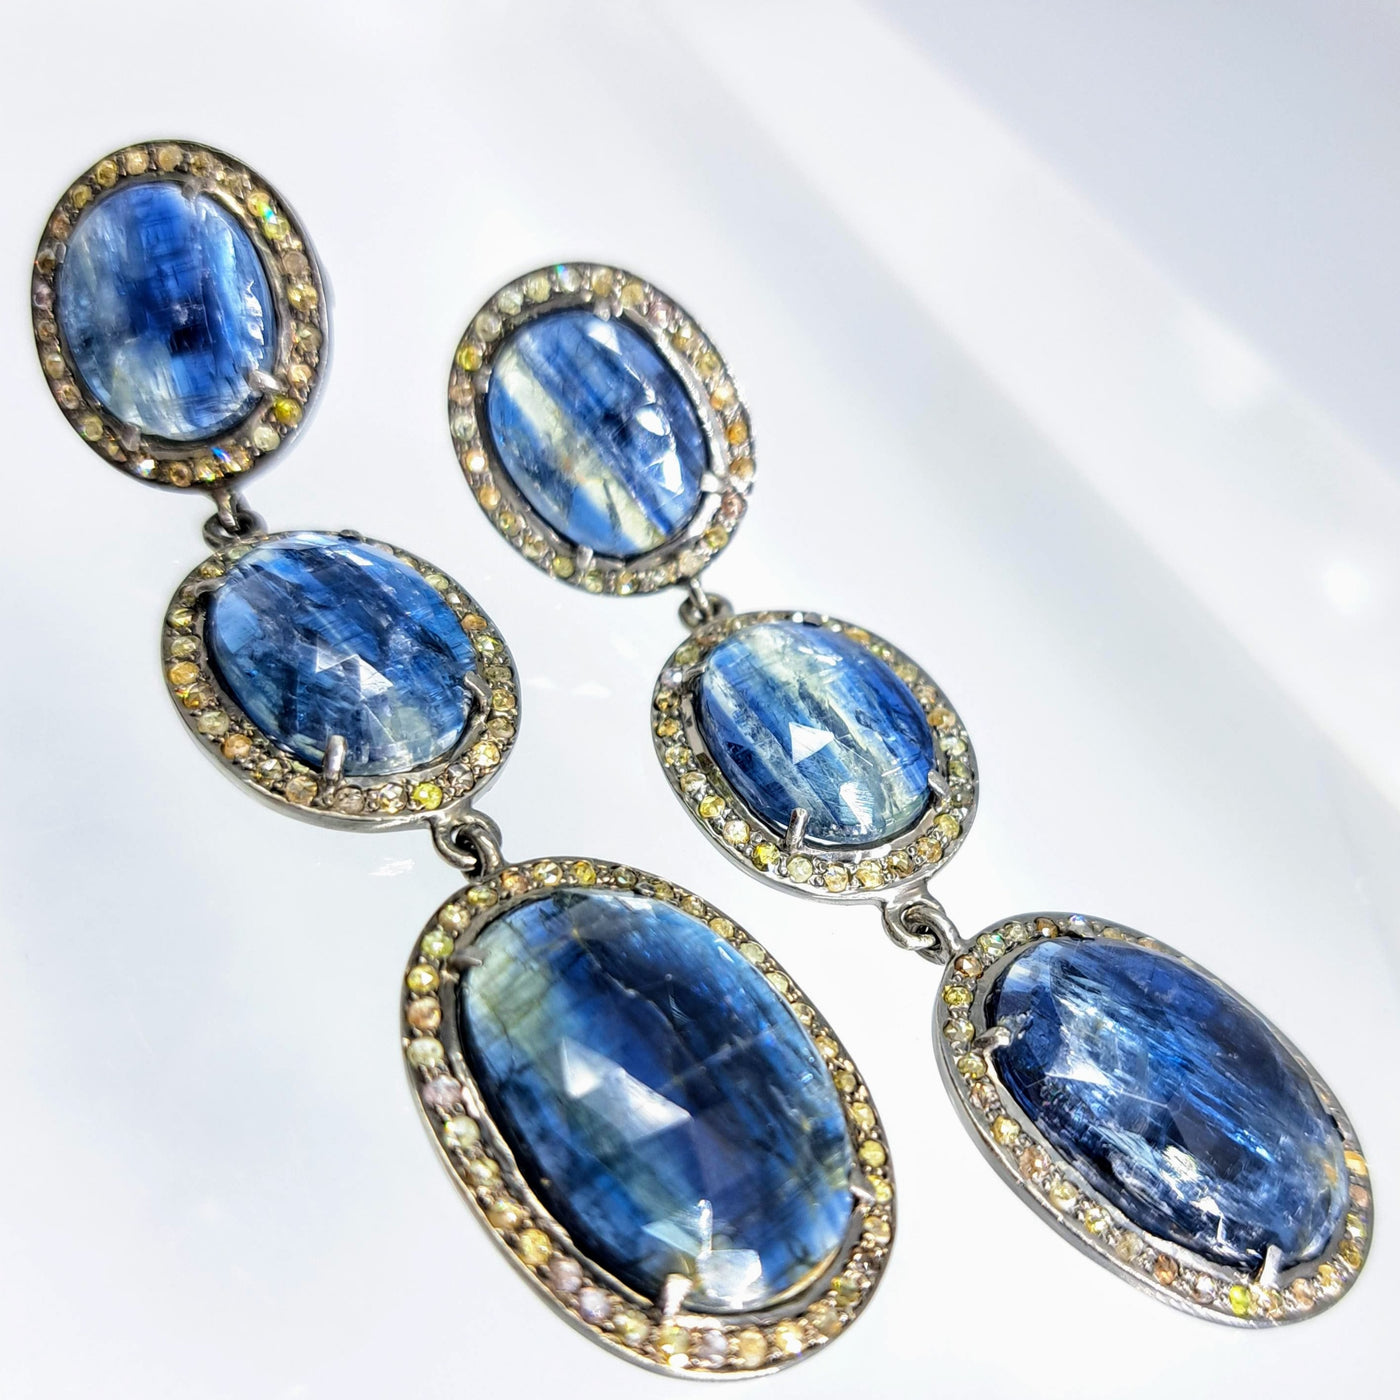 "Sapphire Seductress" Earrings - Blue Sapphire, Diamonds, Black Sterling